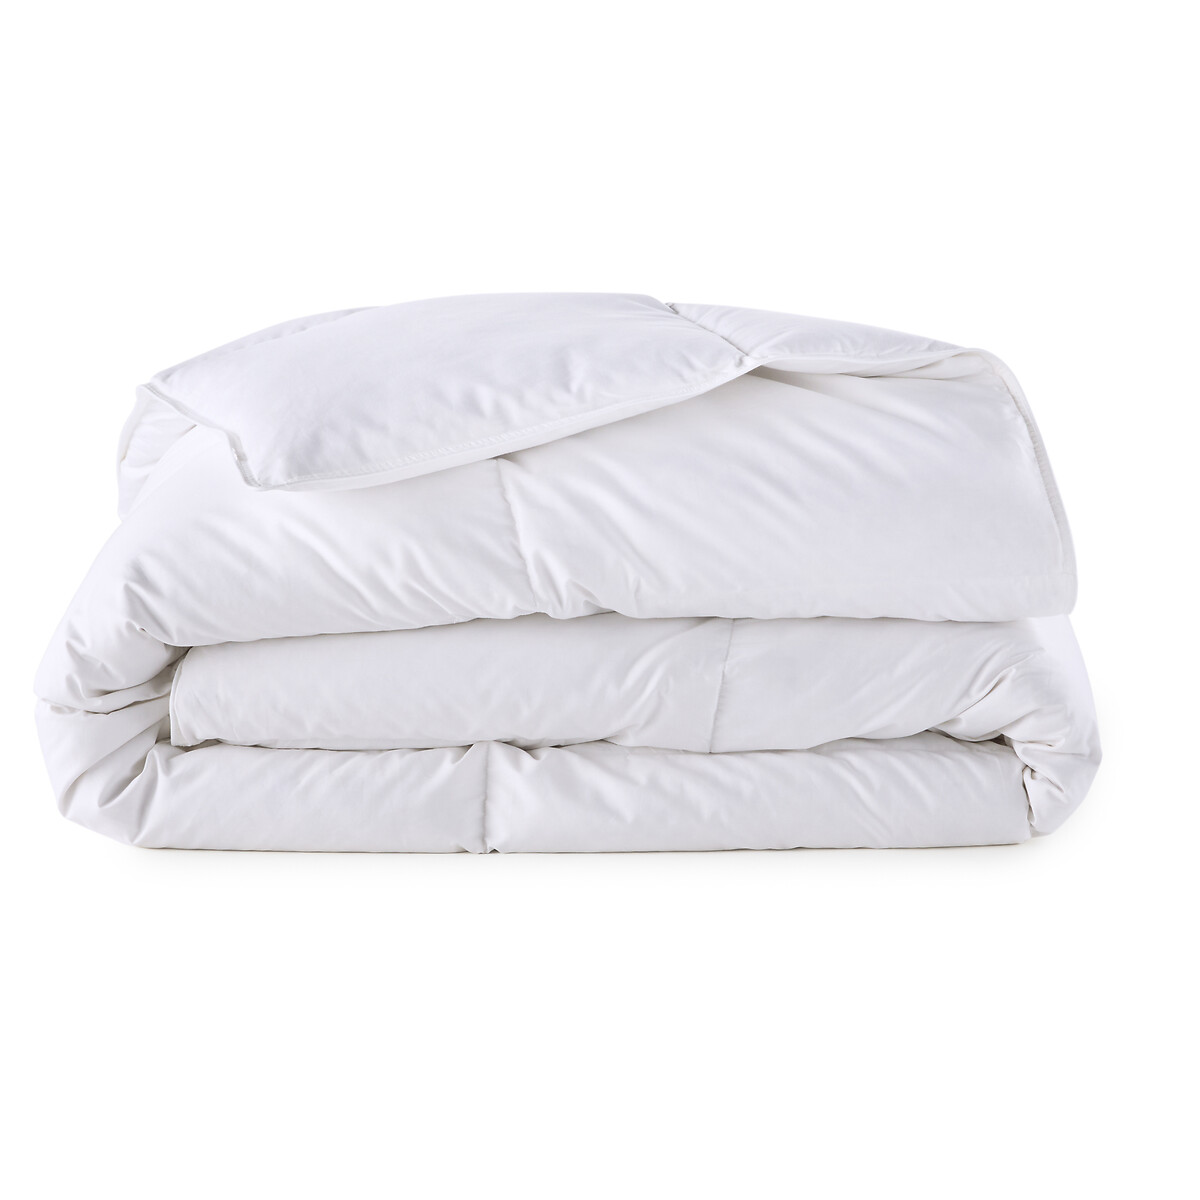 Одеяло La Redoute пуха  гм с обработкой Proneem 140 x 200 см белый, размер 140 x 200 см - фото 2